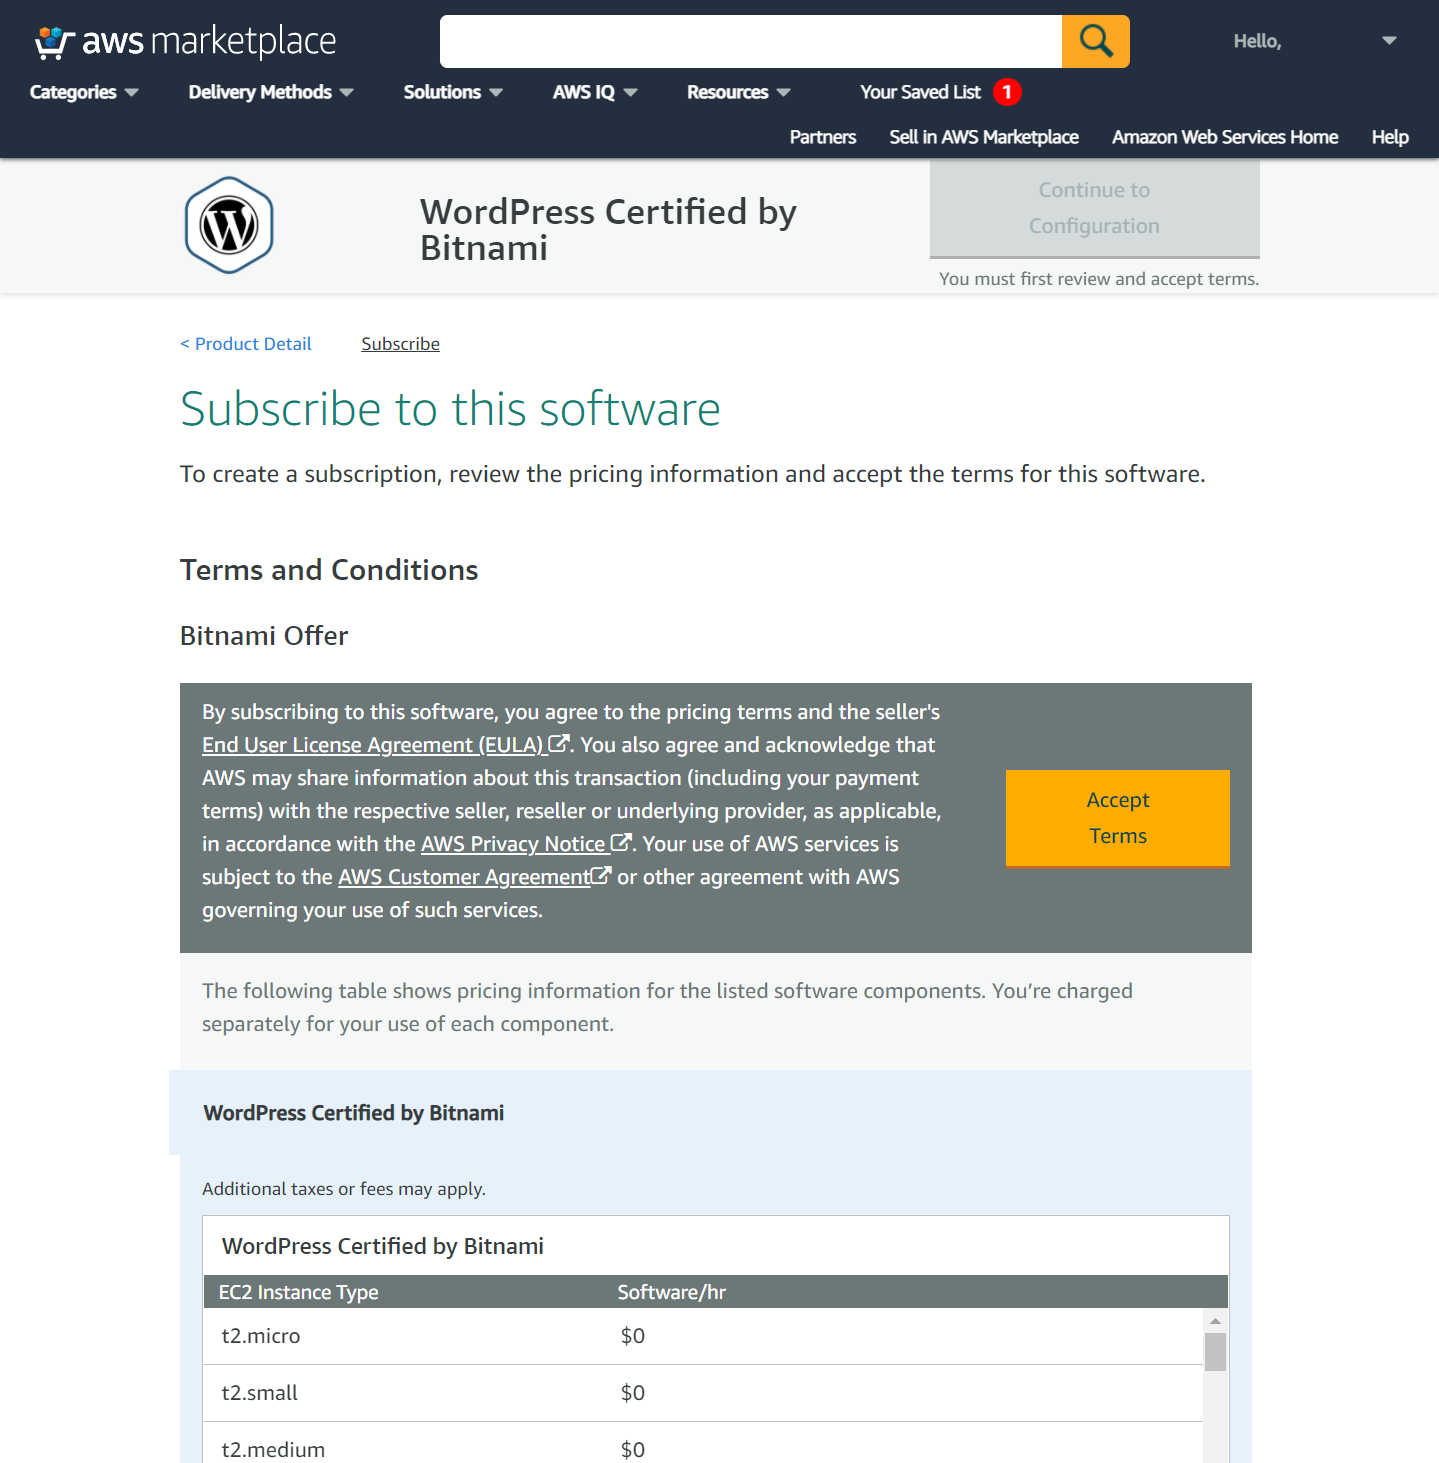 FireShot Capture 004 - AWS Marketplace_ WordPress Certified by Bitnami - aws.amazon.com.png